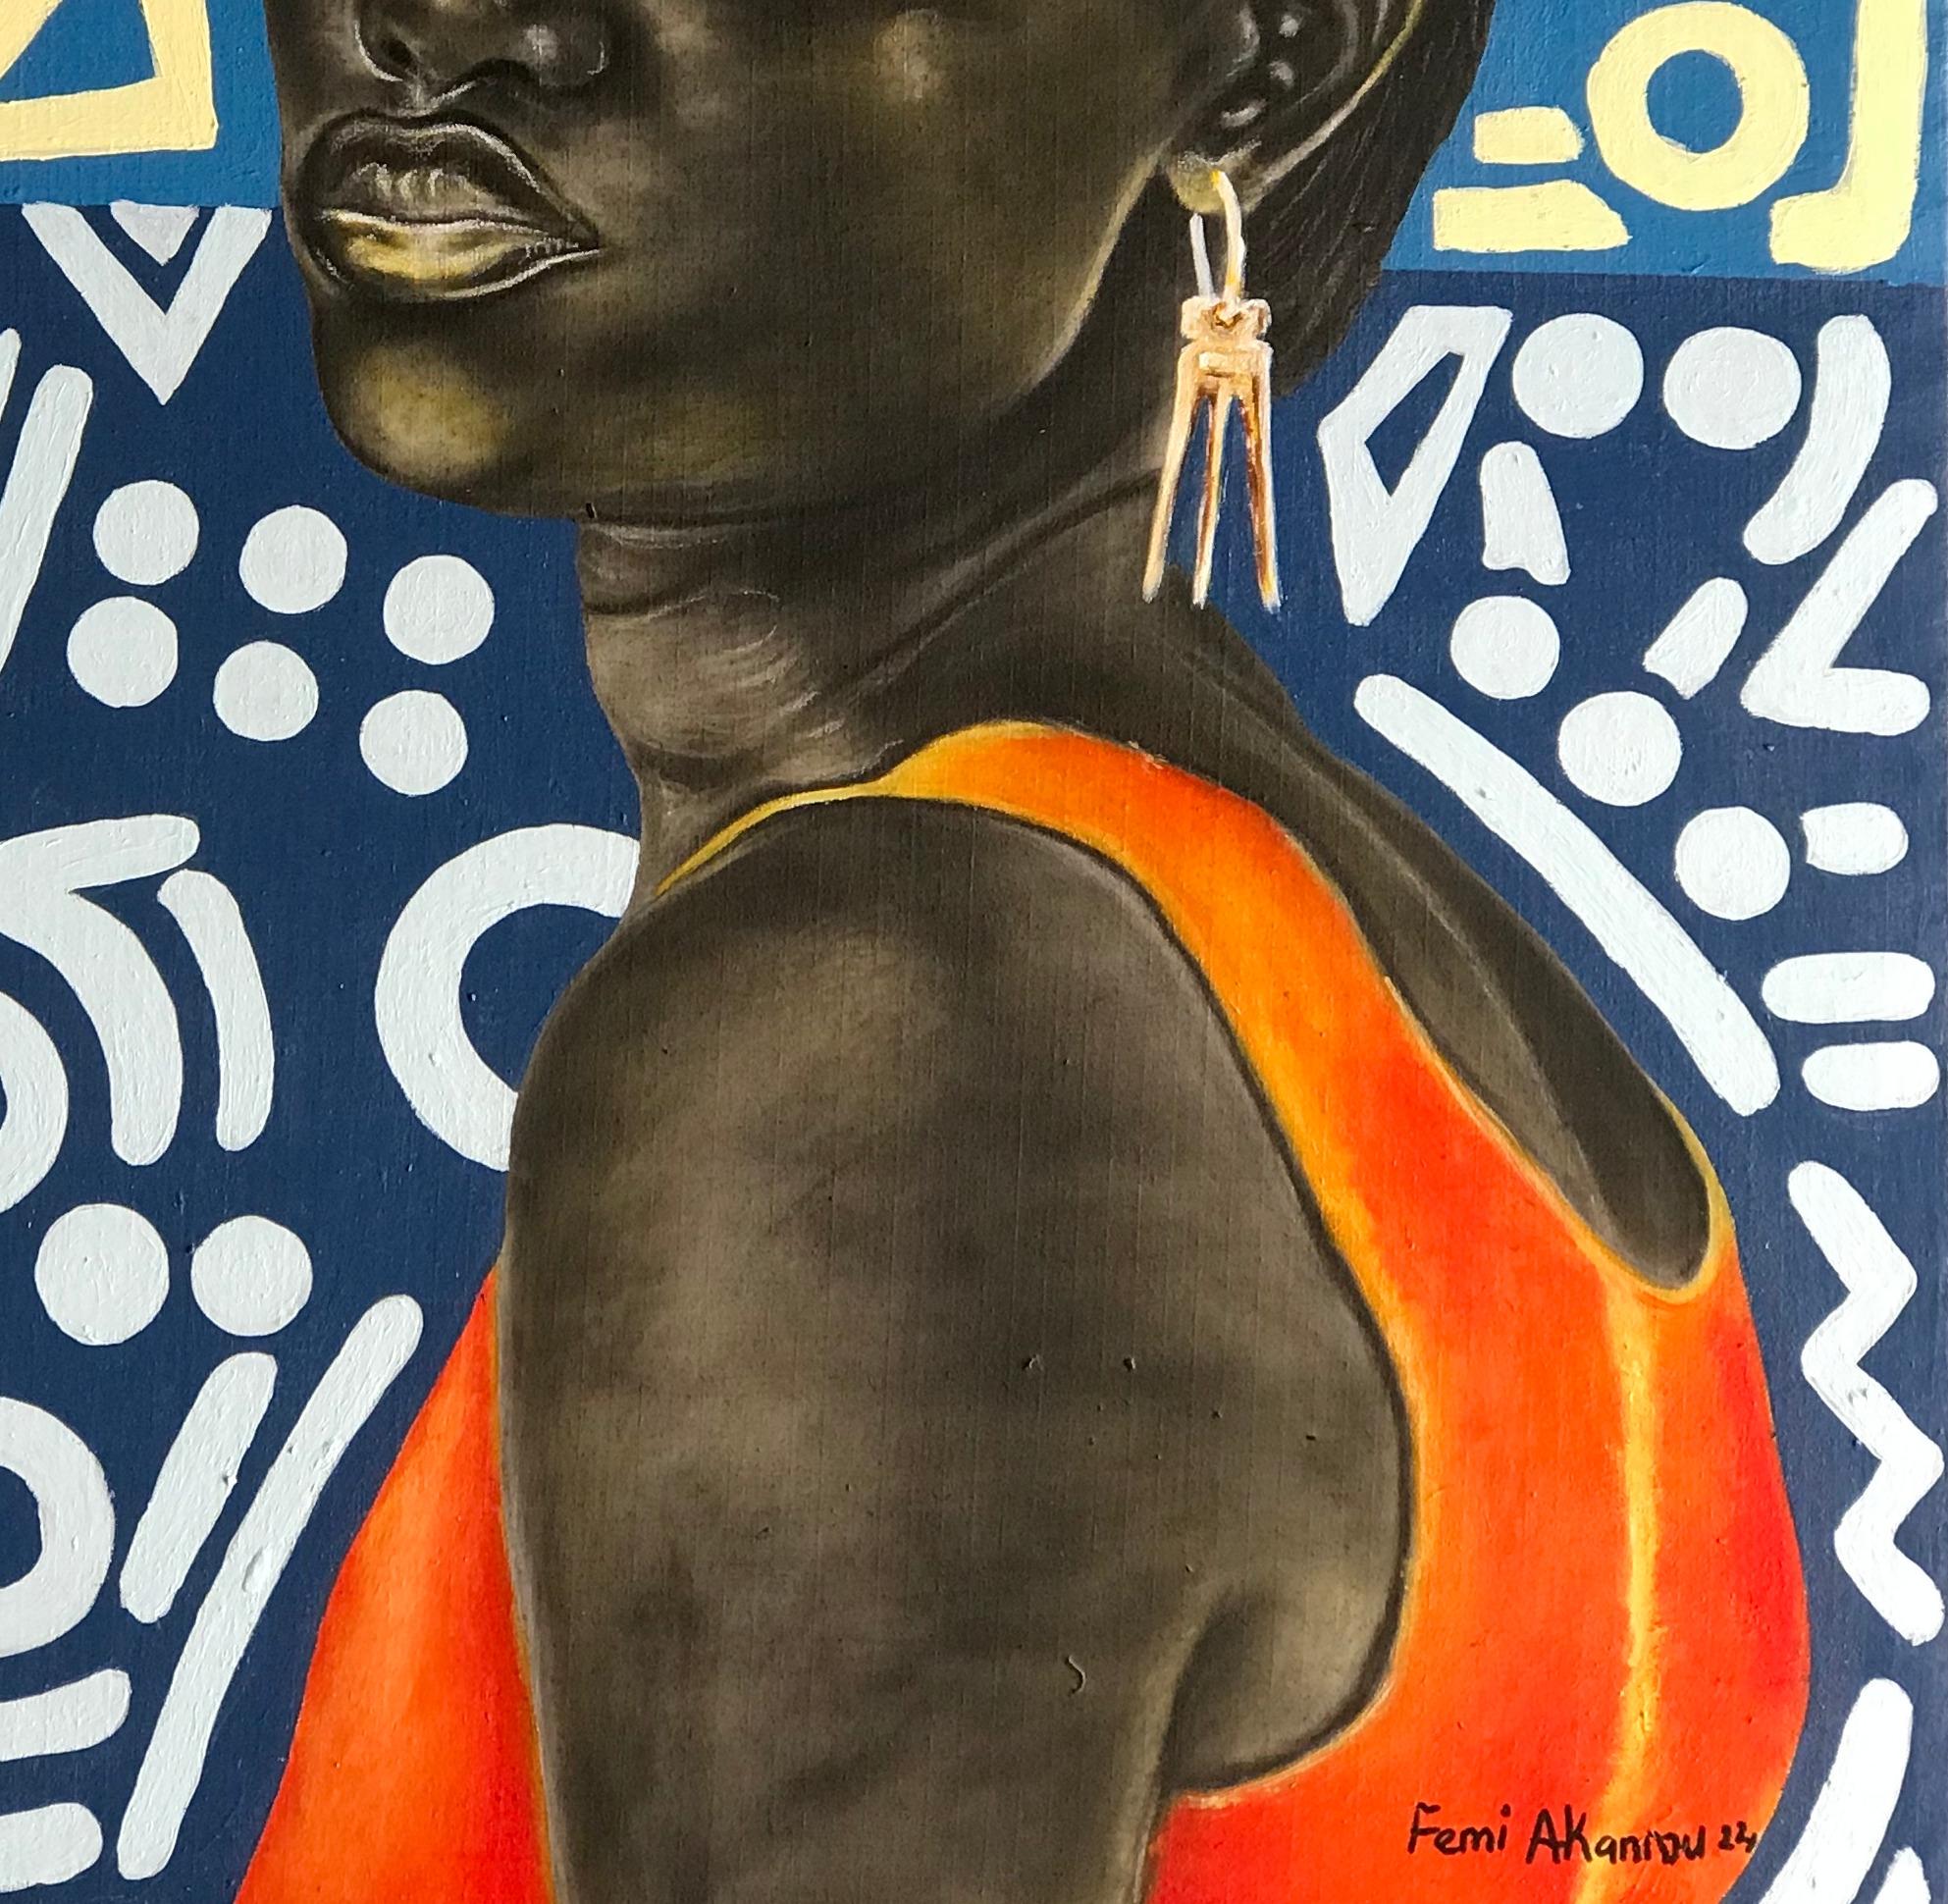 Vague - Contemporary Painting by Oluwafemi Akanmu